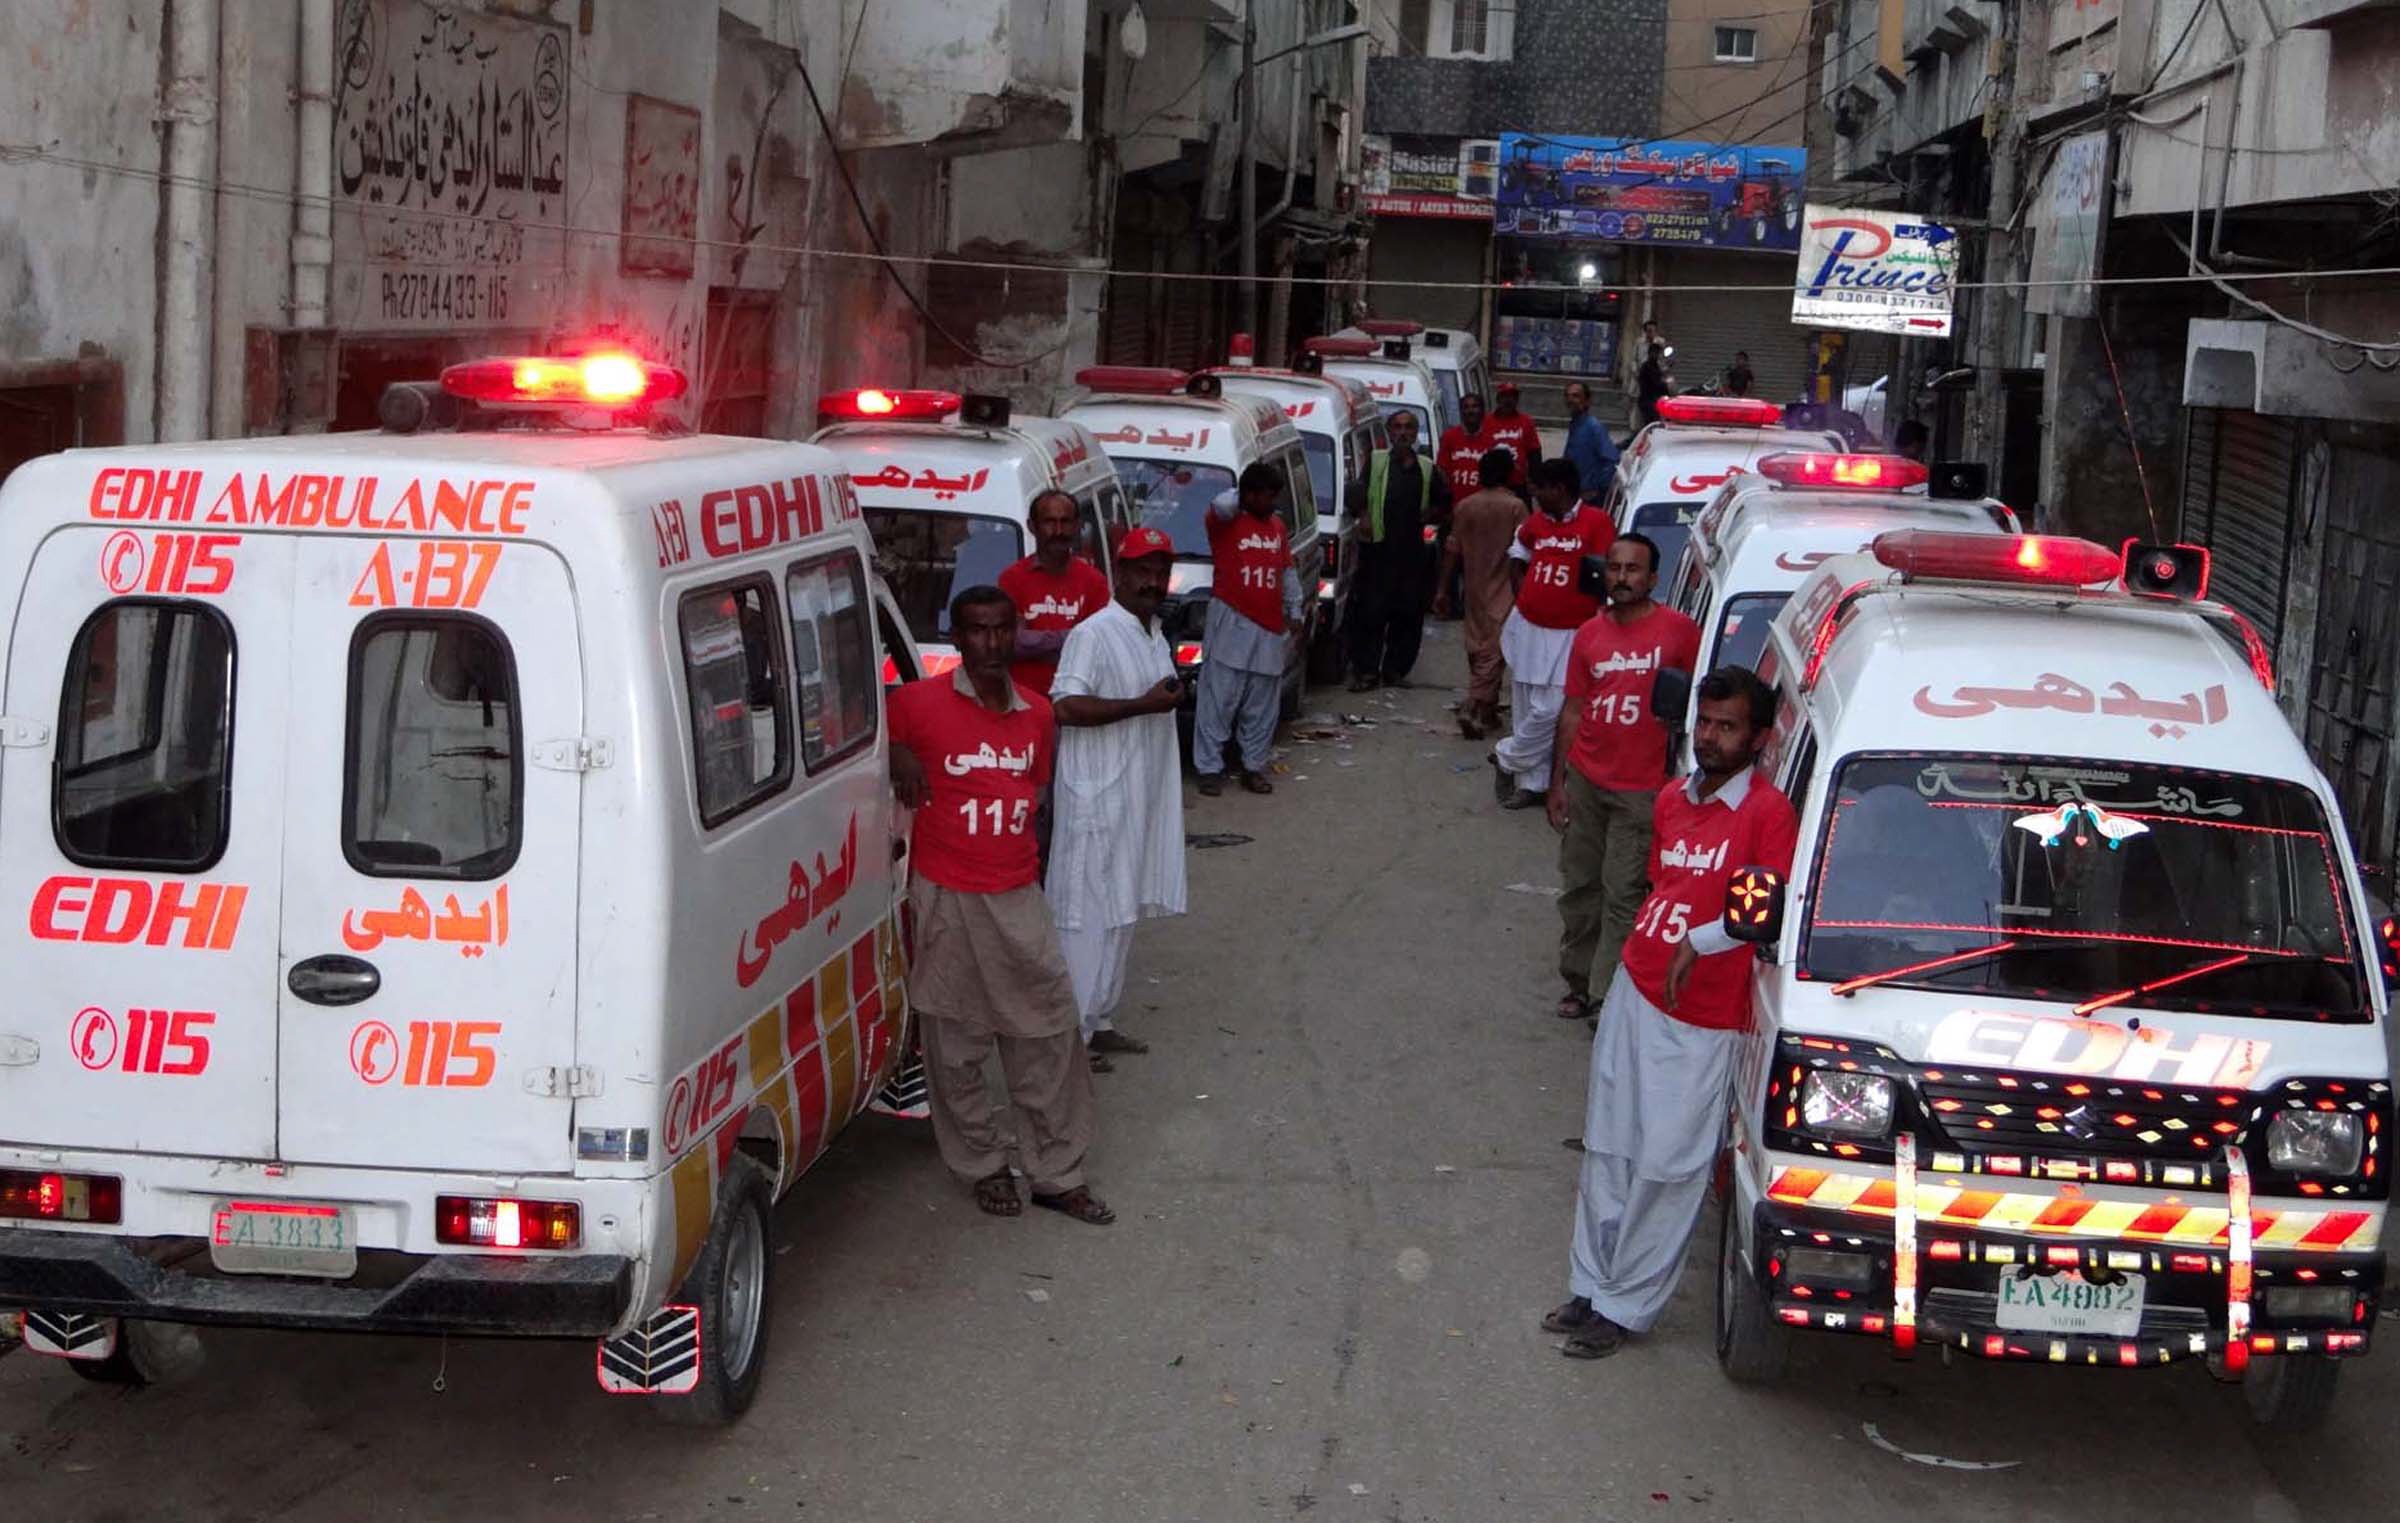 edhi-ambulance-service-2